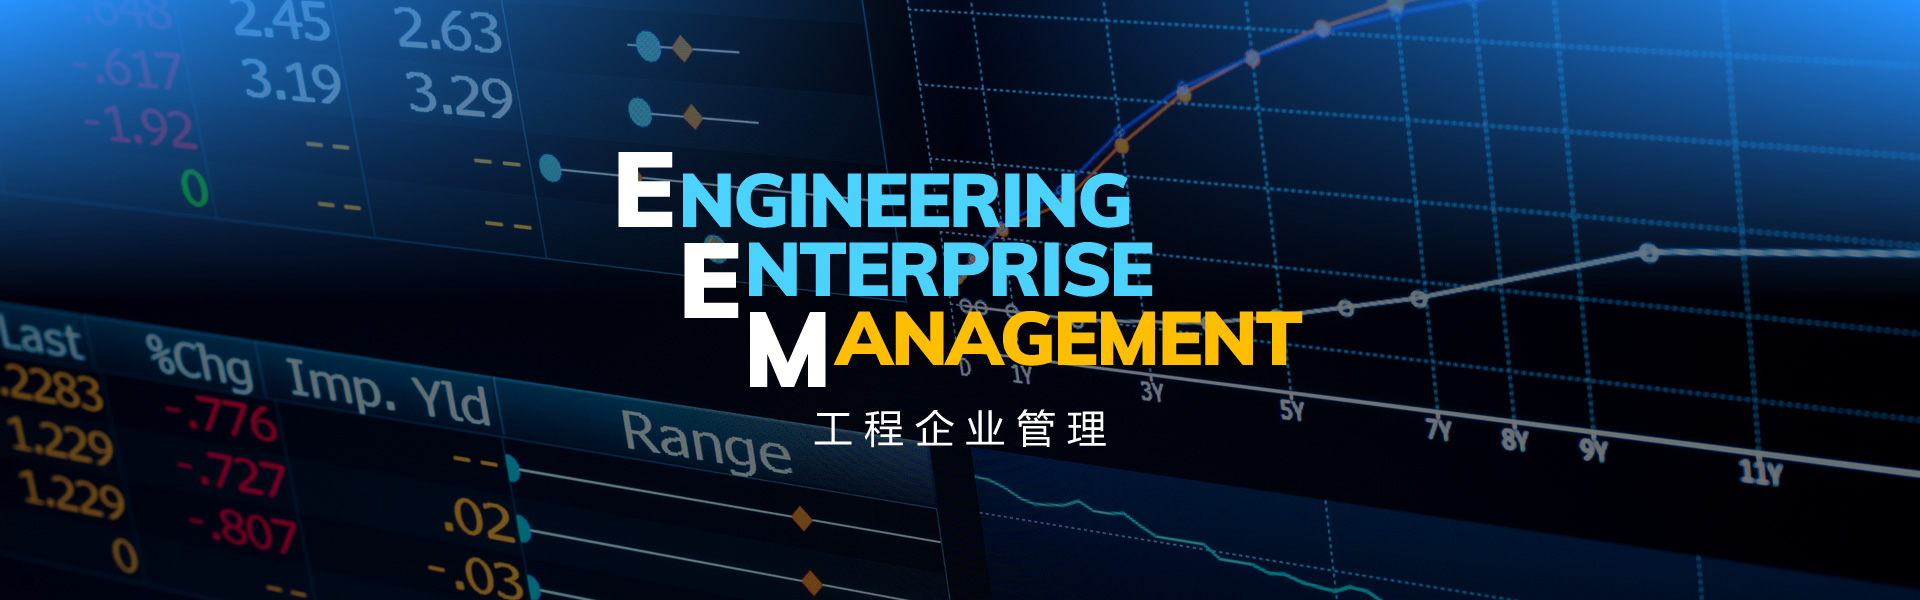 Engineering Enterprise Management